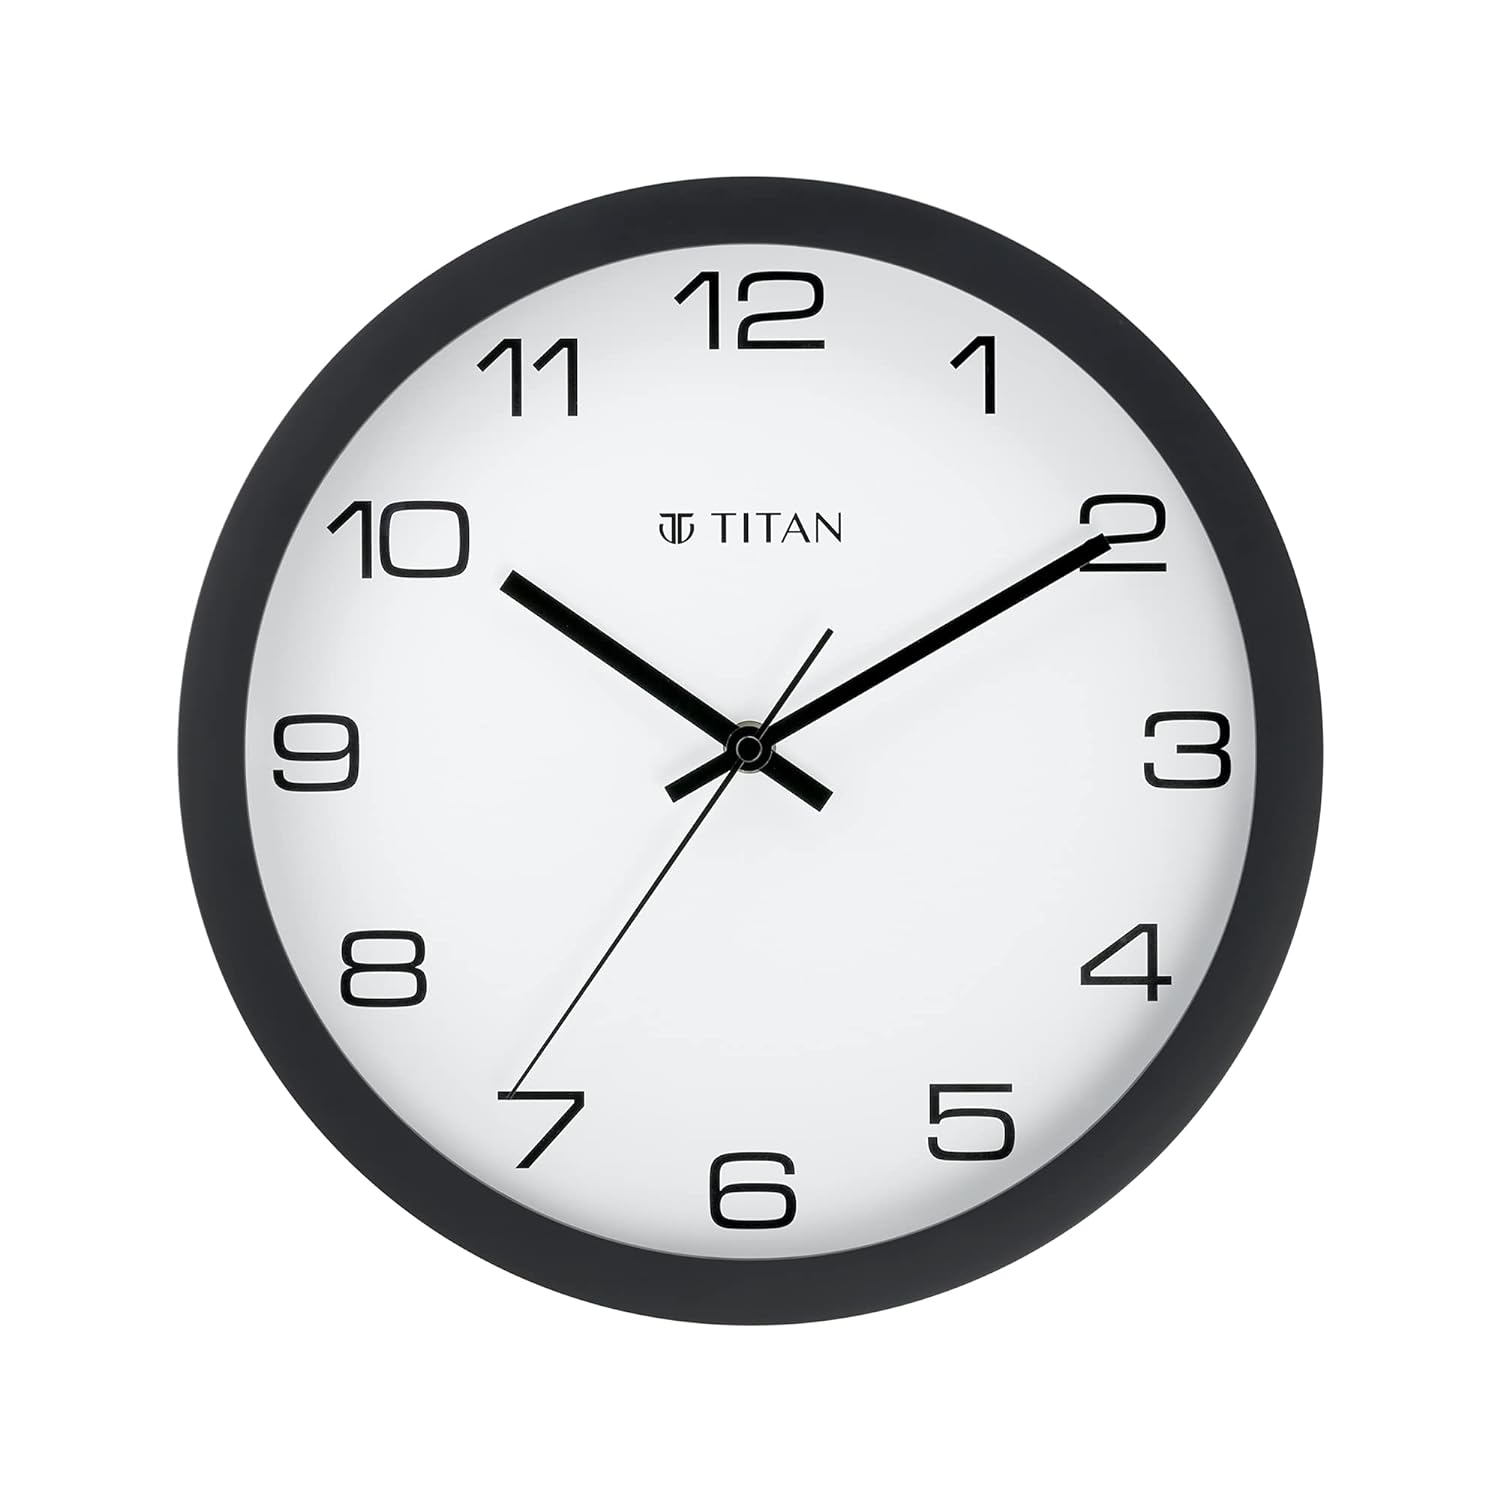 Titan Wall Clock